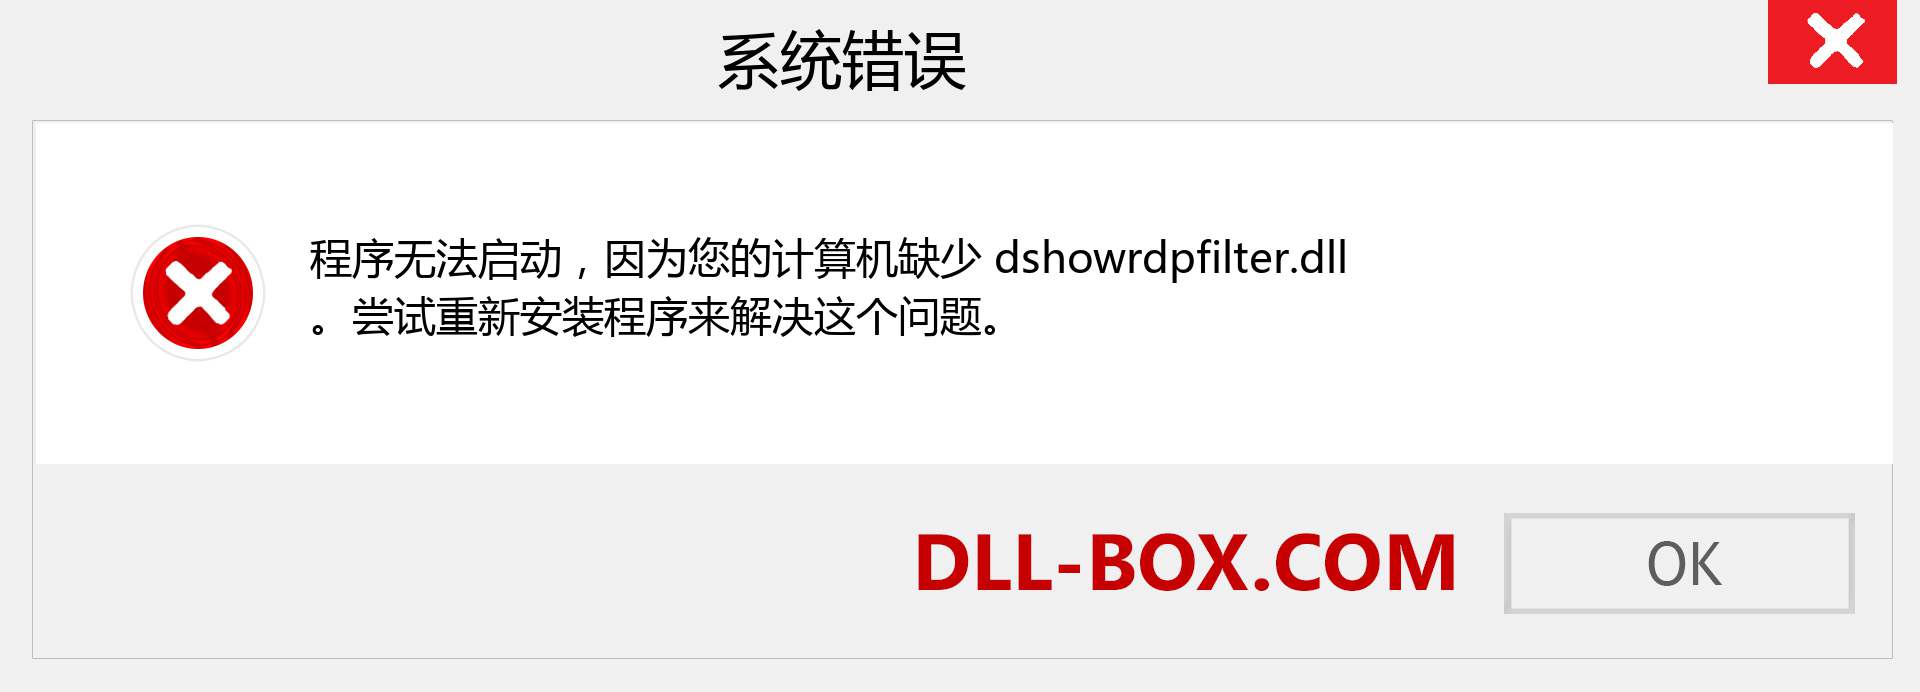 dshowrdpfilter.dll 文件丢失？。 适用于 Windows 7、8、10 的下载 - 修复 Windows、照片、图像上的 dshowrdpfilter dll 丢失错误